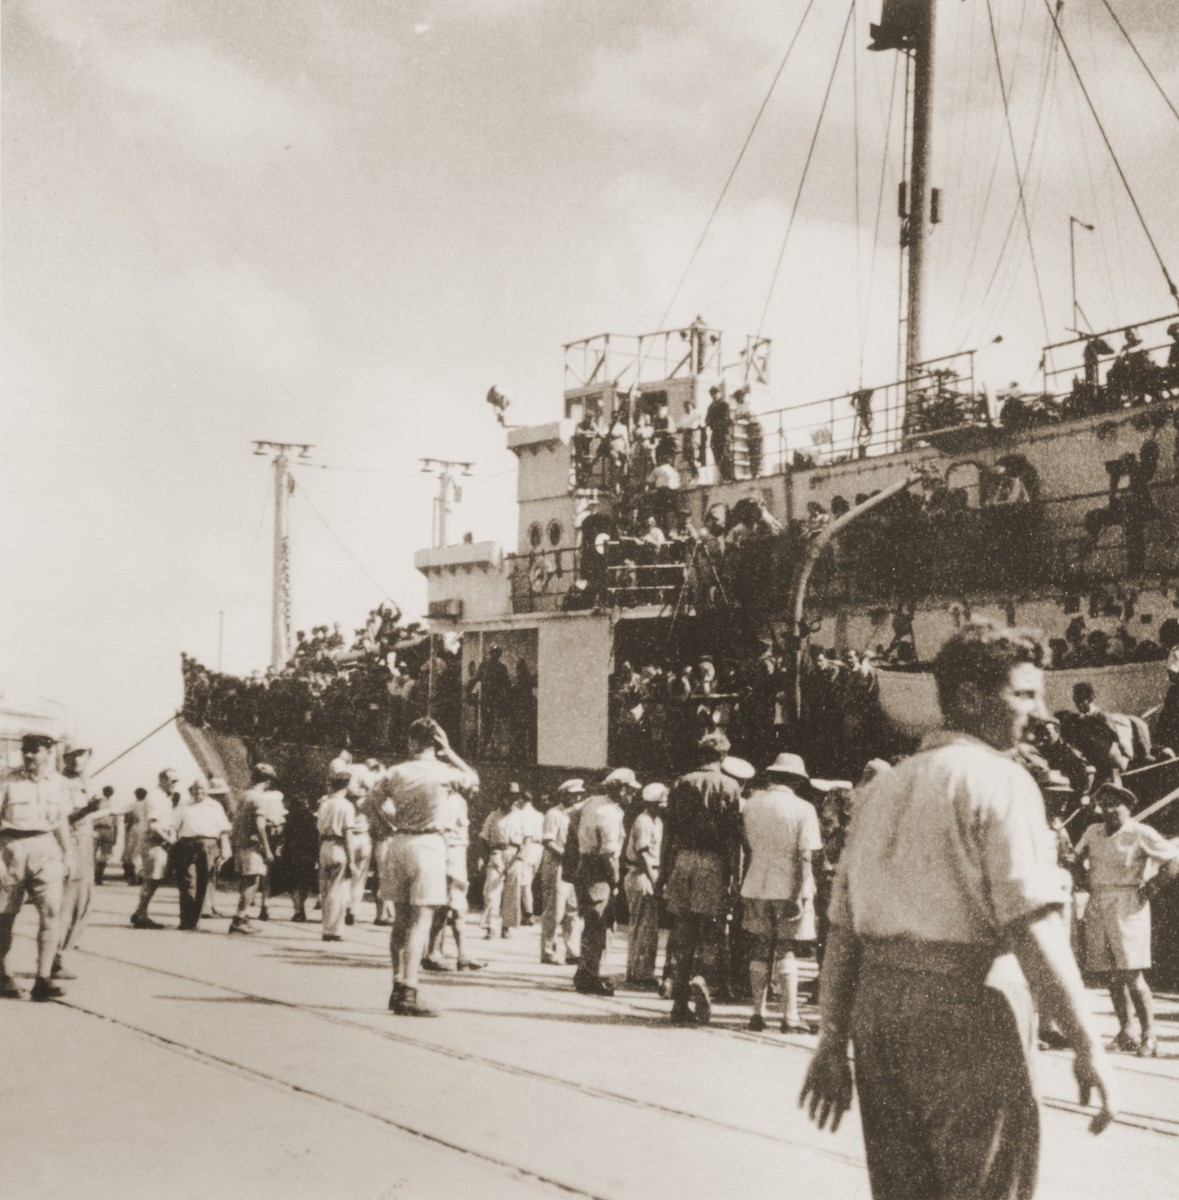 Passengers disembark from the Mala immigrant ship in the port of Haifa.